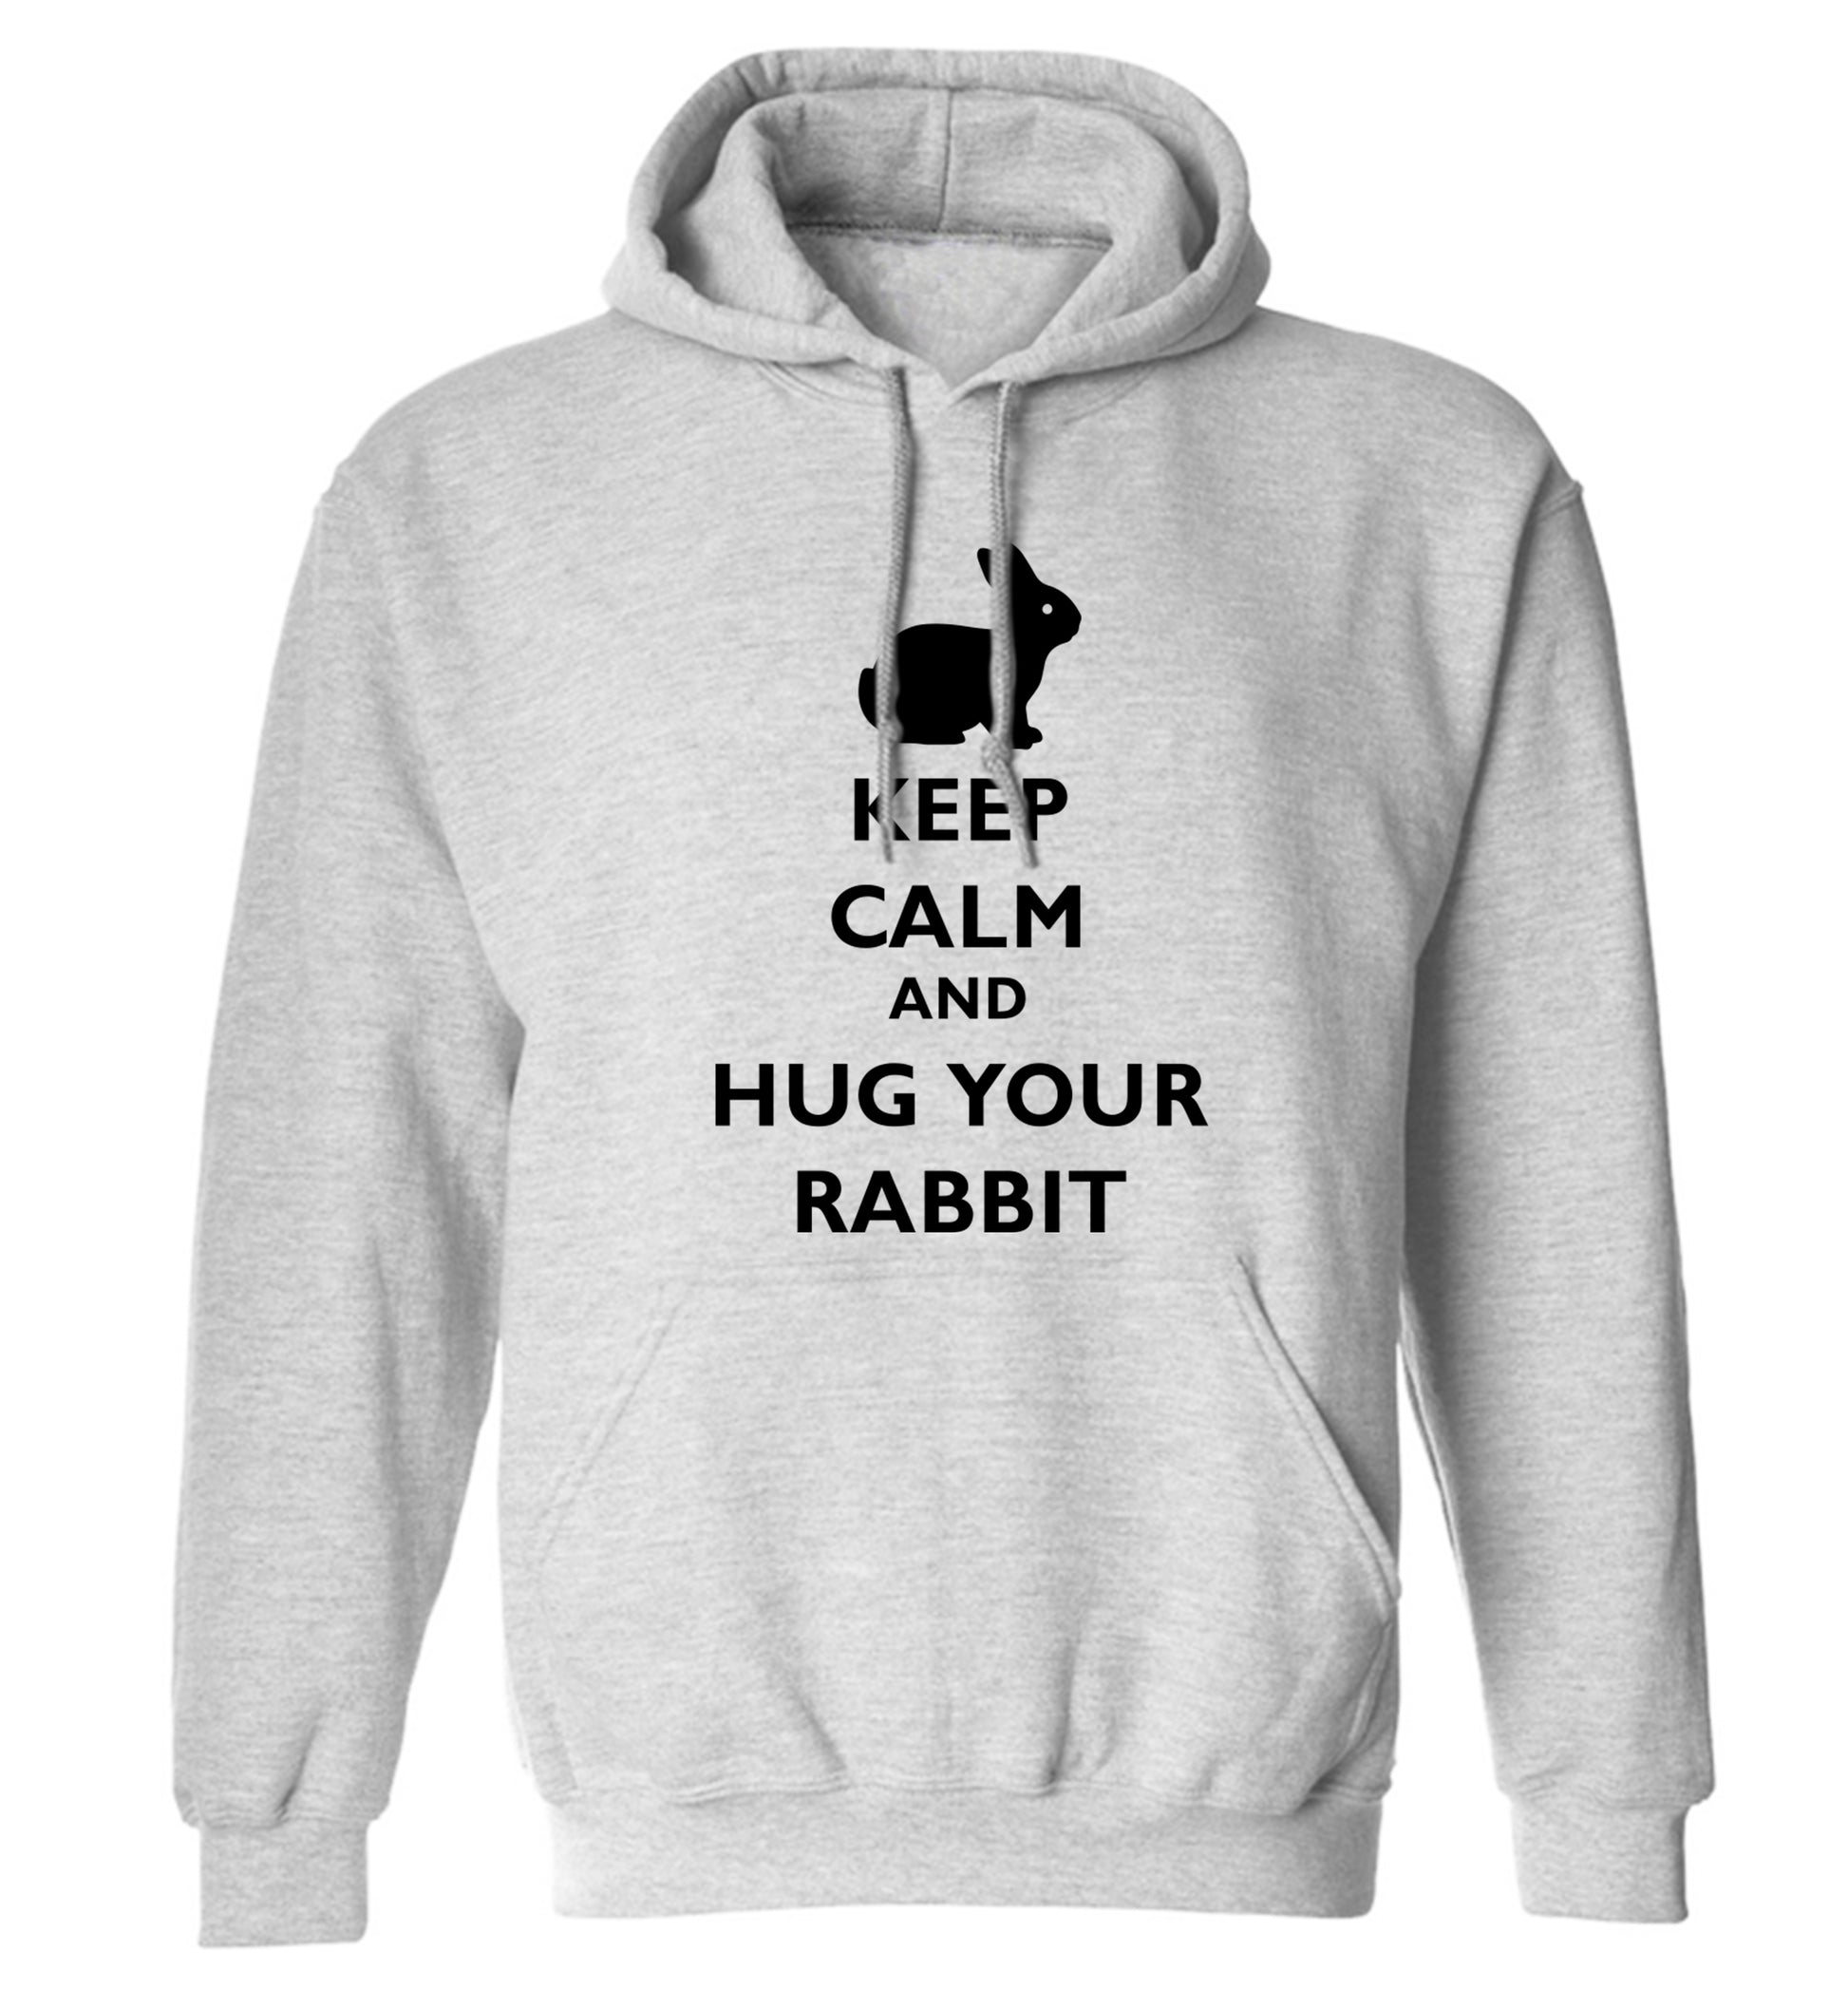 Keep calm and hug your rabbit adults unisex grey hoodie 2XL